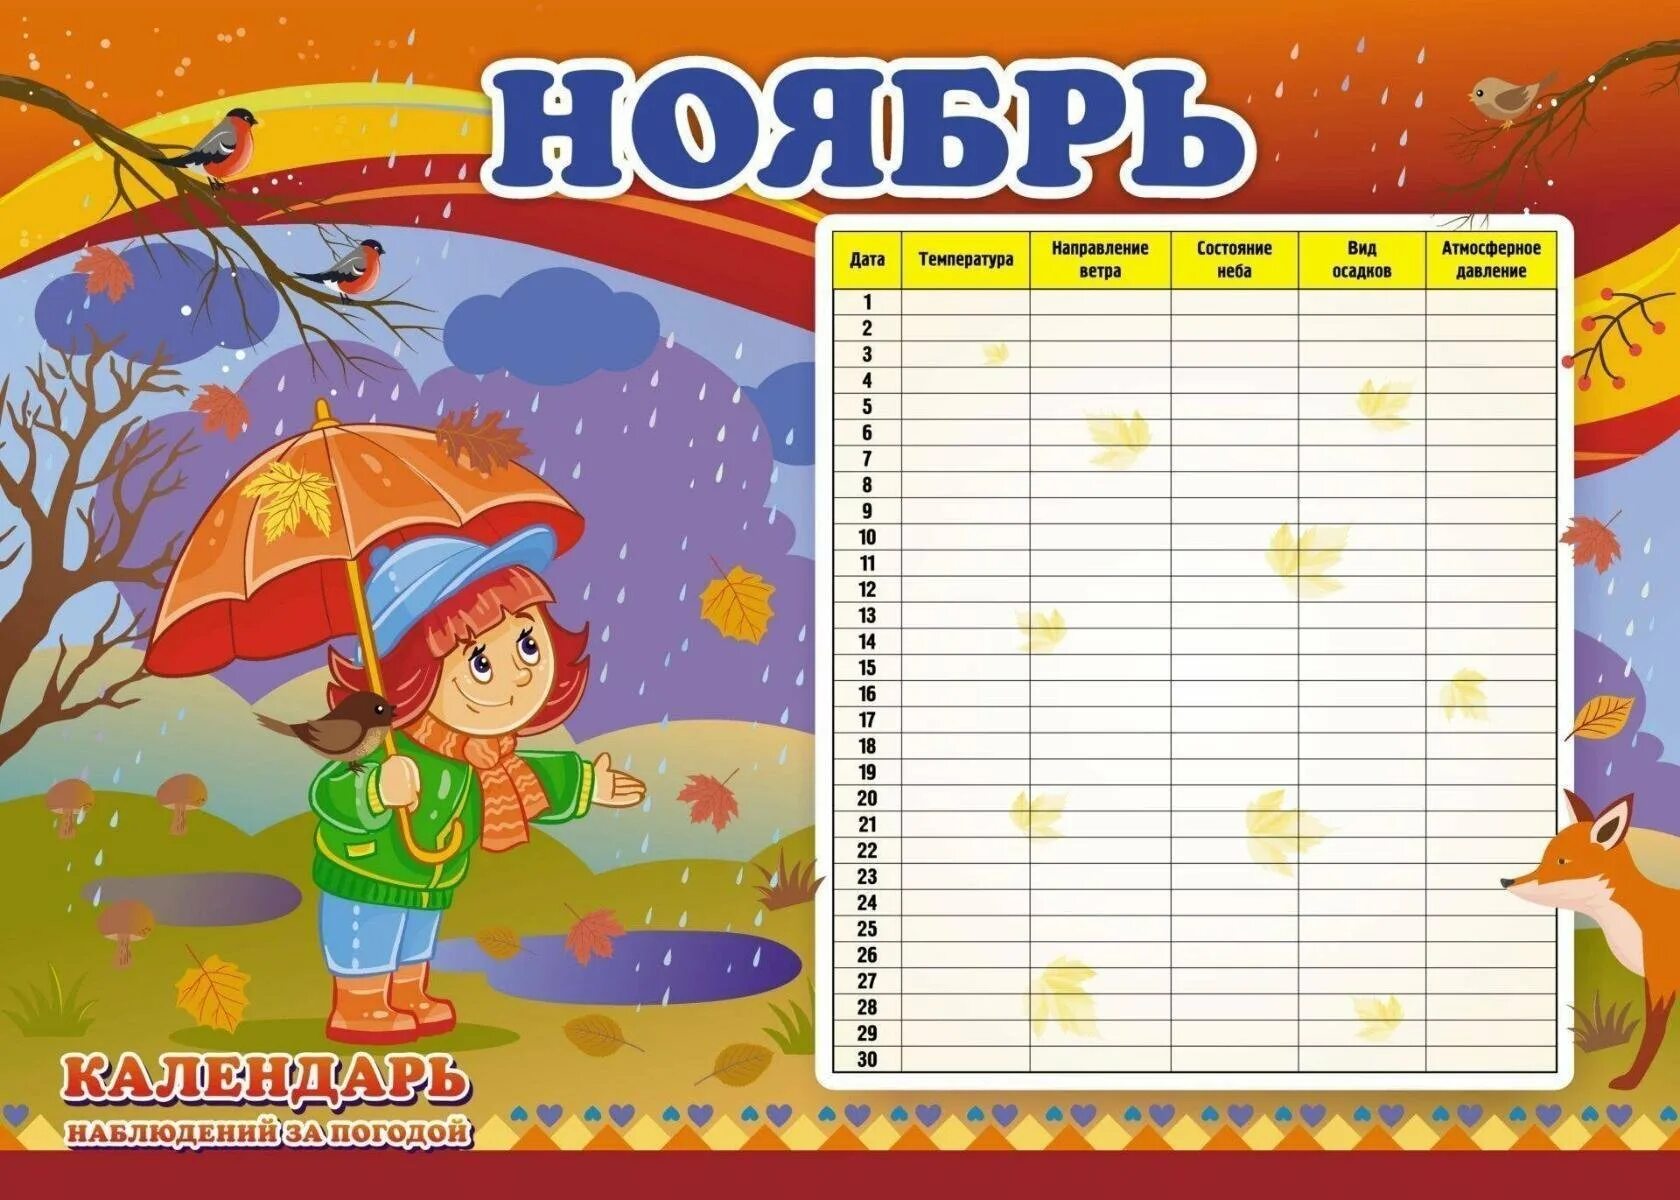 Наблюдения за изменениями погоды. Календарь наблюдений за погодой. Календарь наблюдений за природой. Rfktylfhm YF,K.ltybz PF ghbhjljq d ltncrjv CFLE. Календарь наблюдений в детском саду.